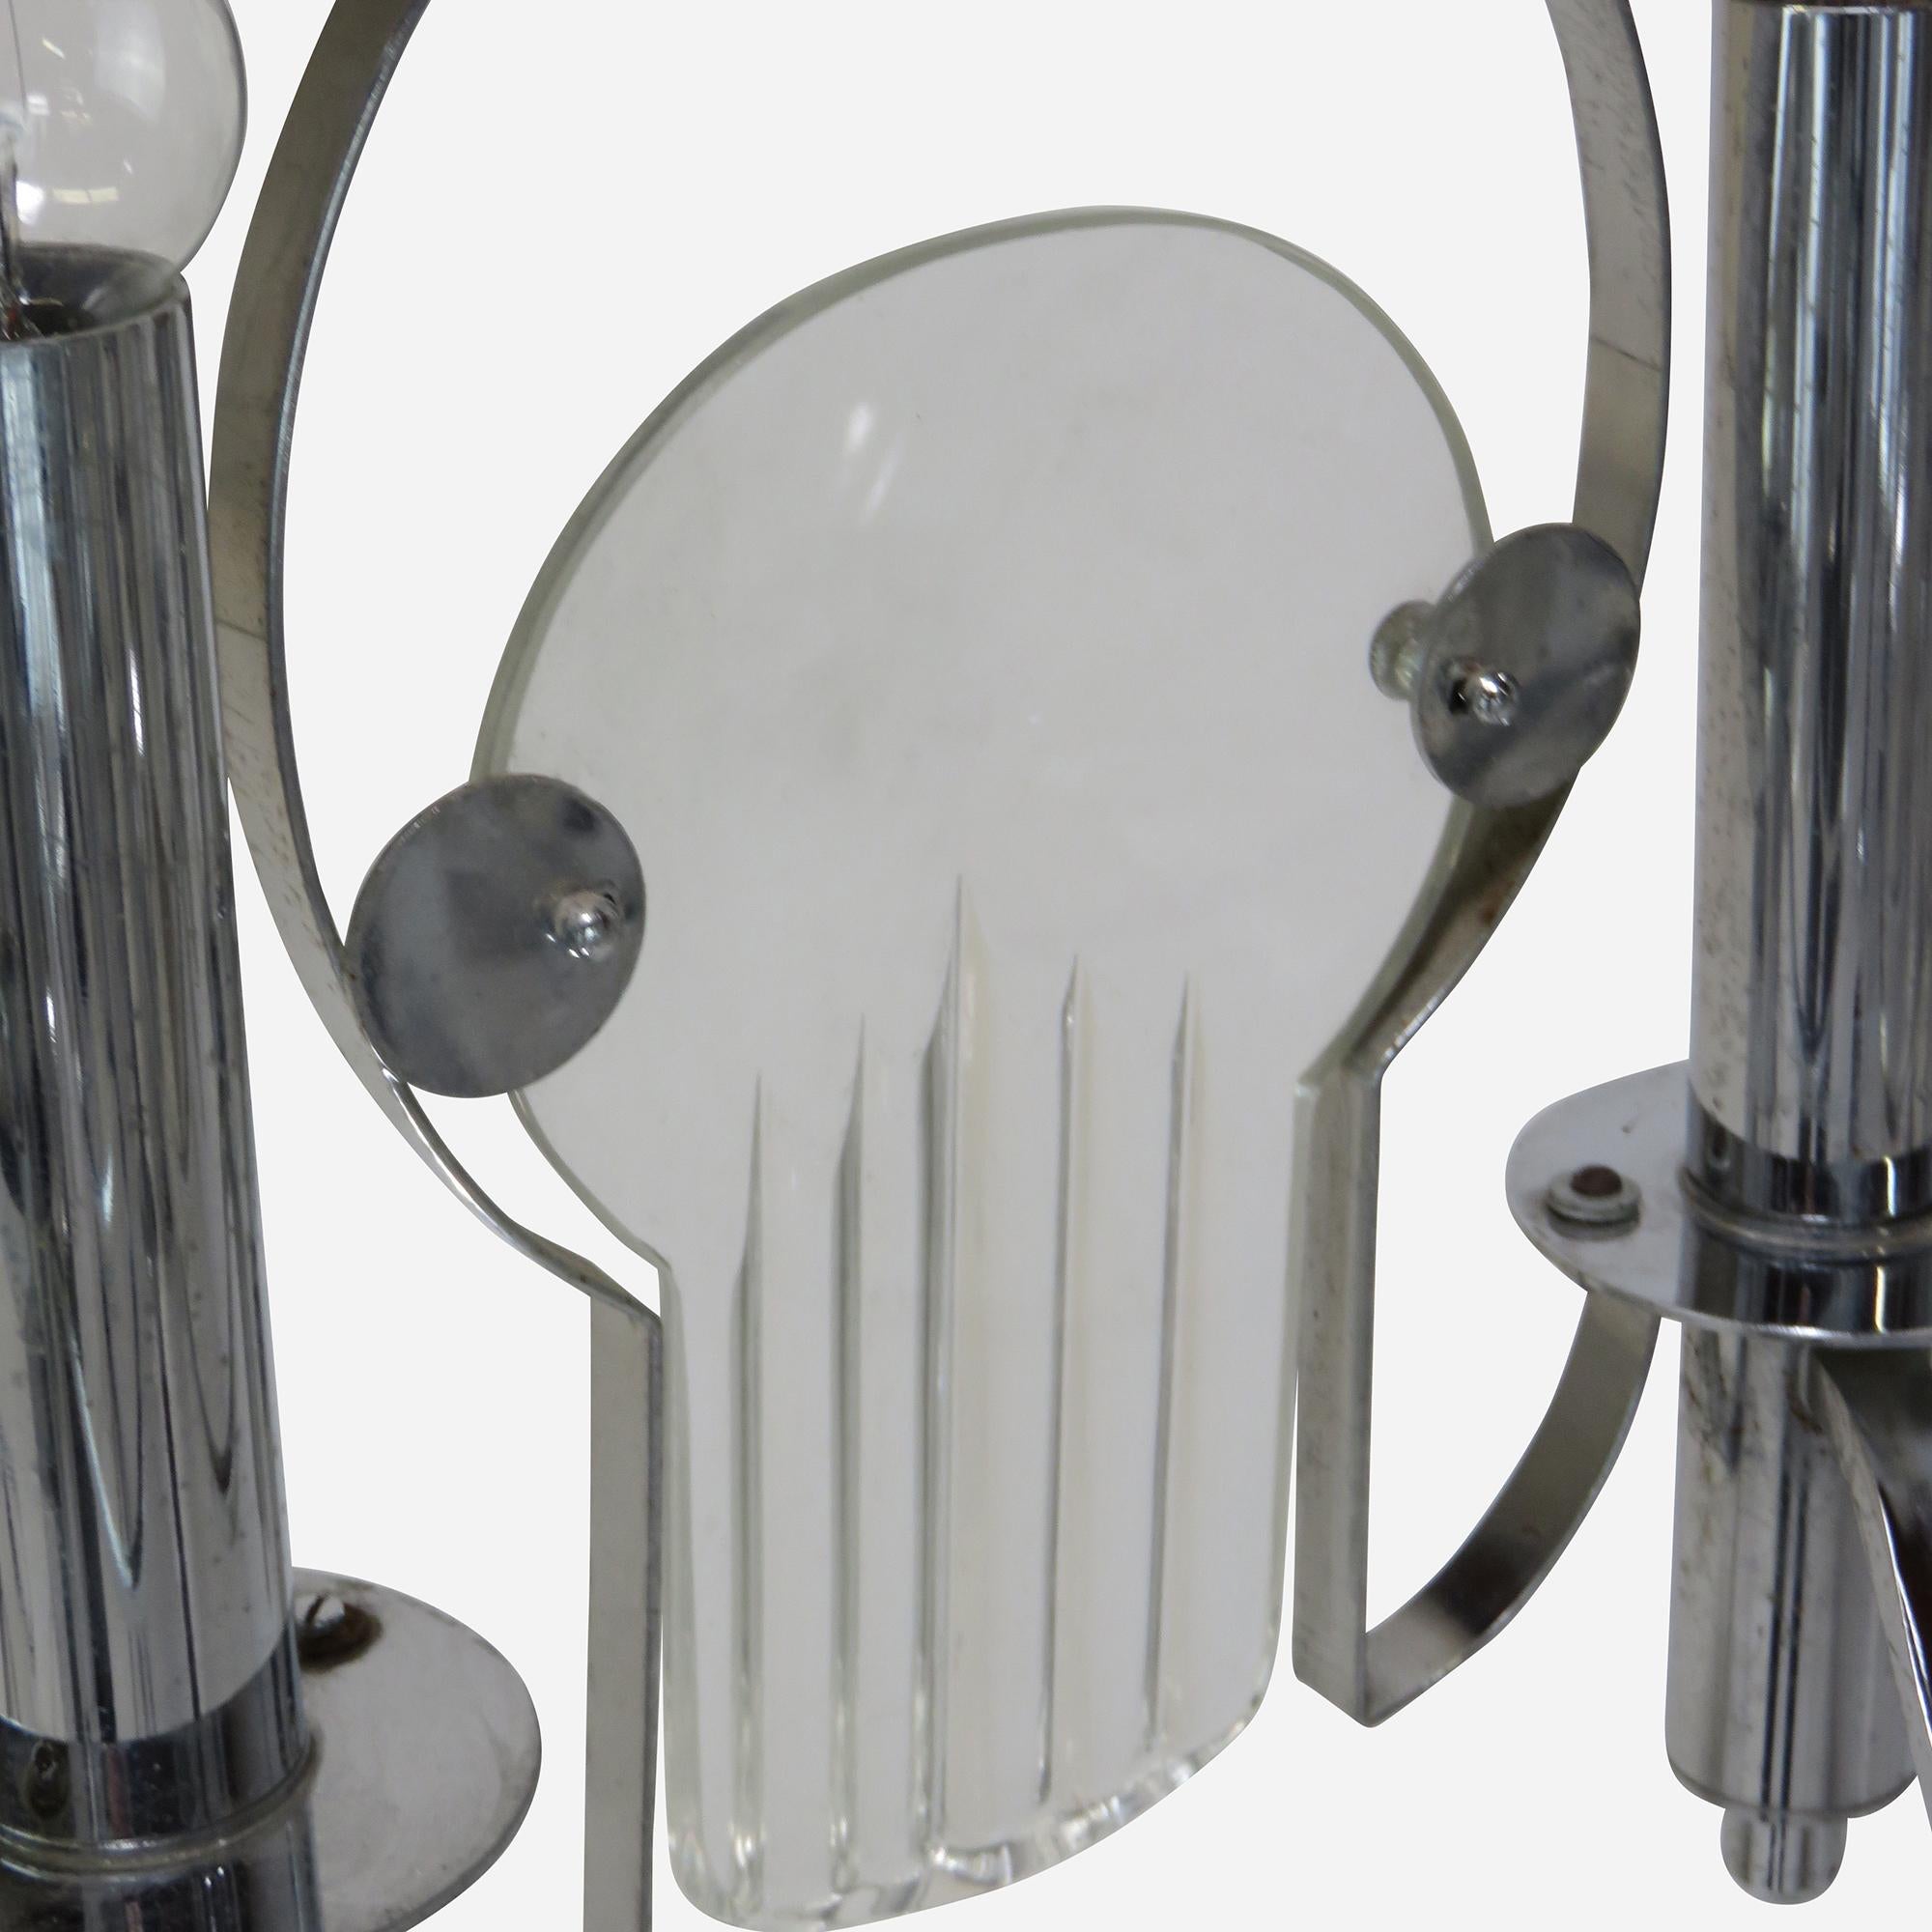 An eight-arm chrome and glass chandelier by Gaetano Sciolari.
Needs rewiring.
